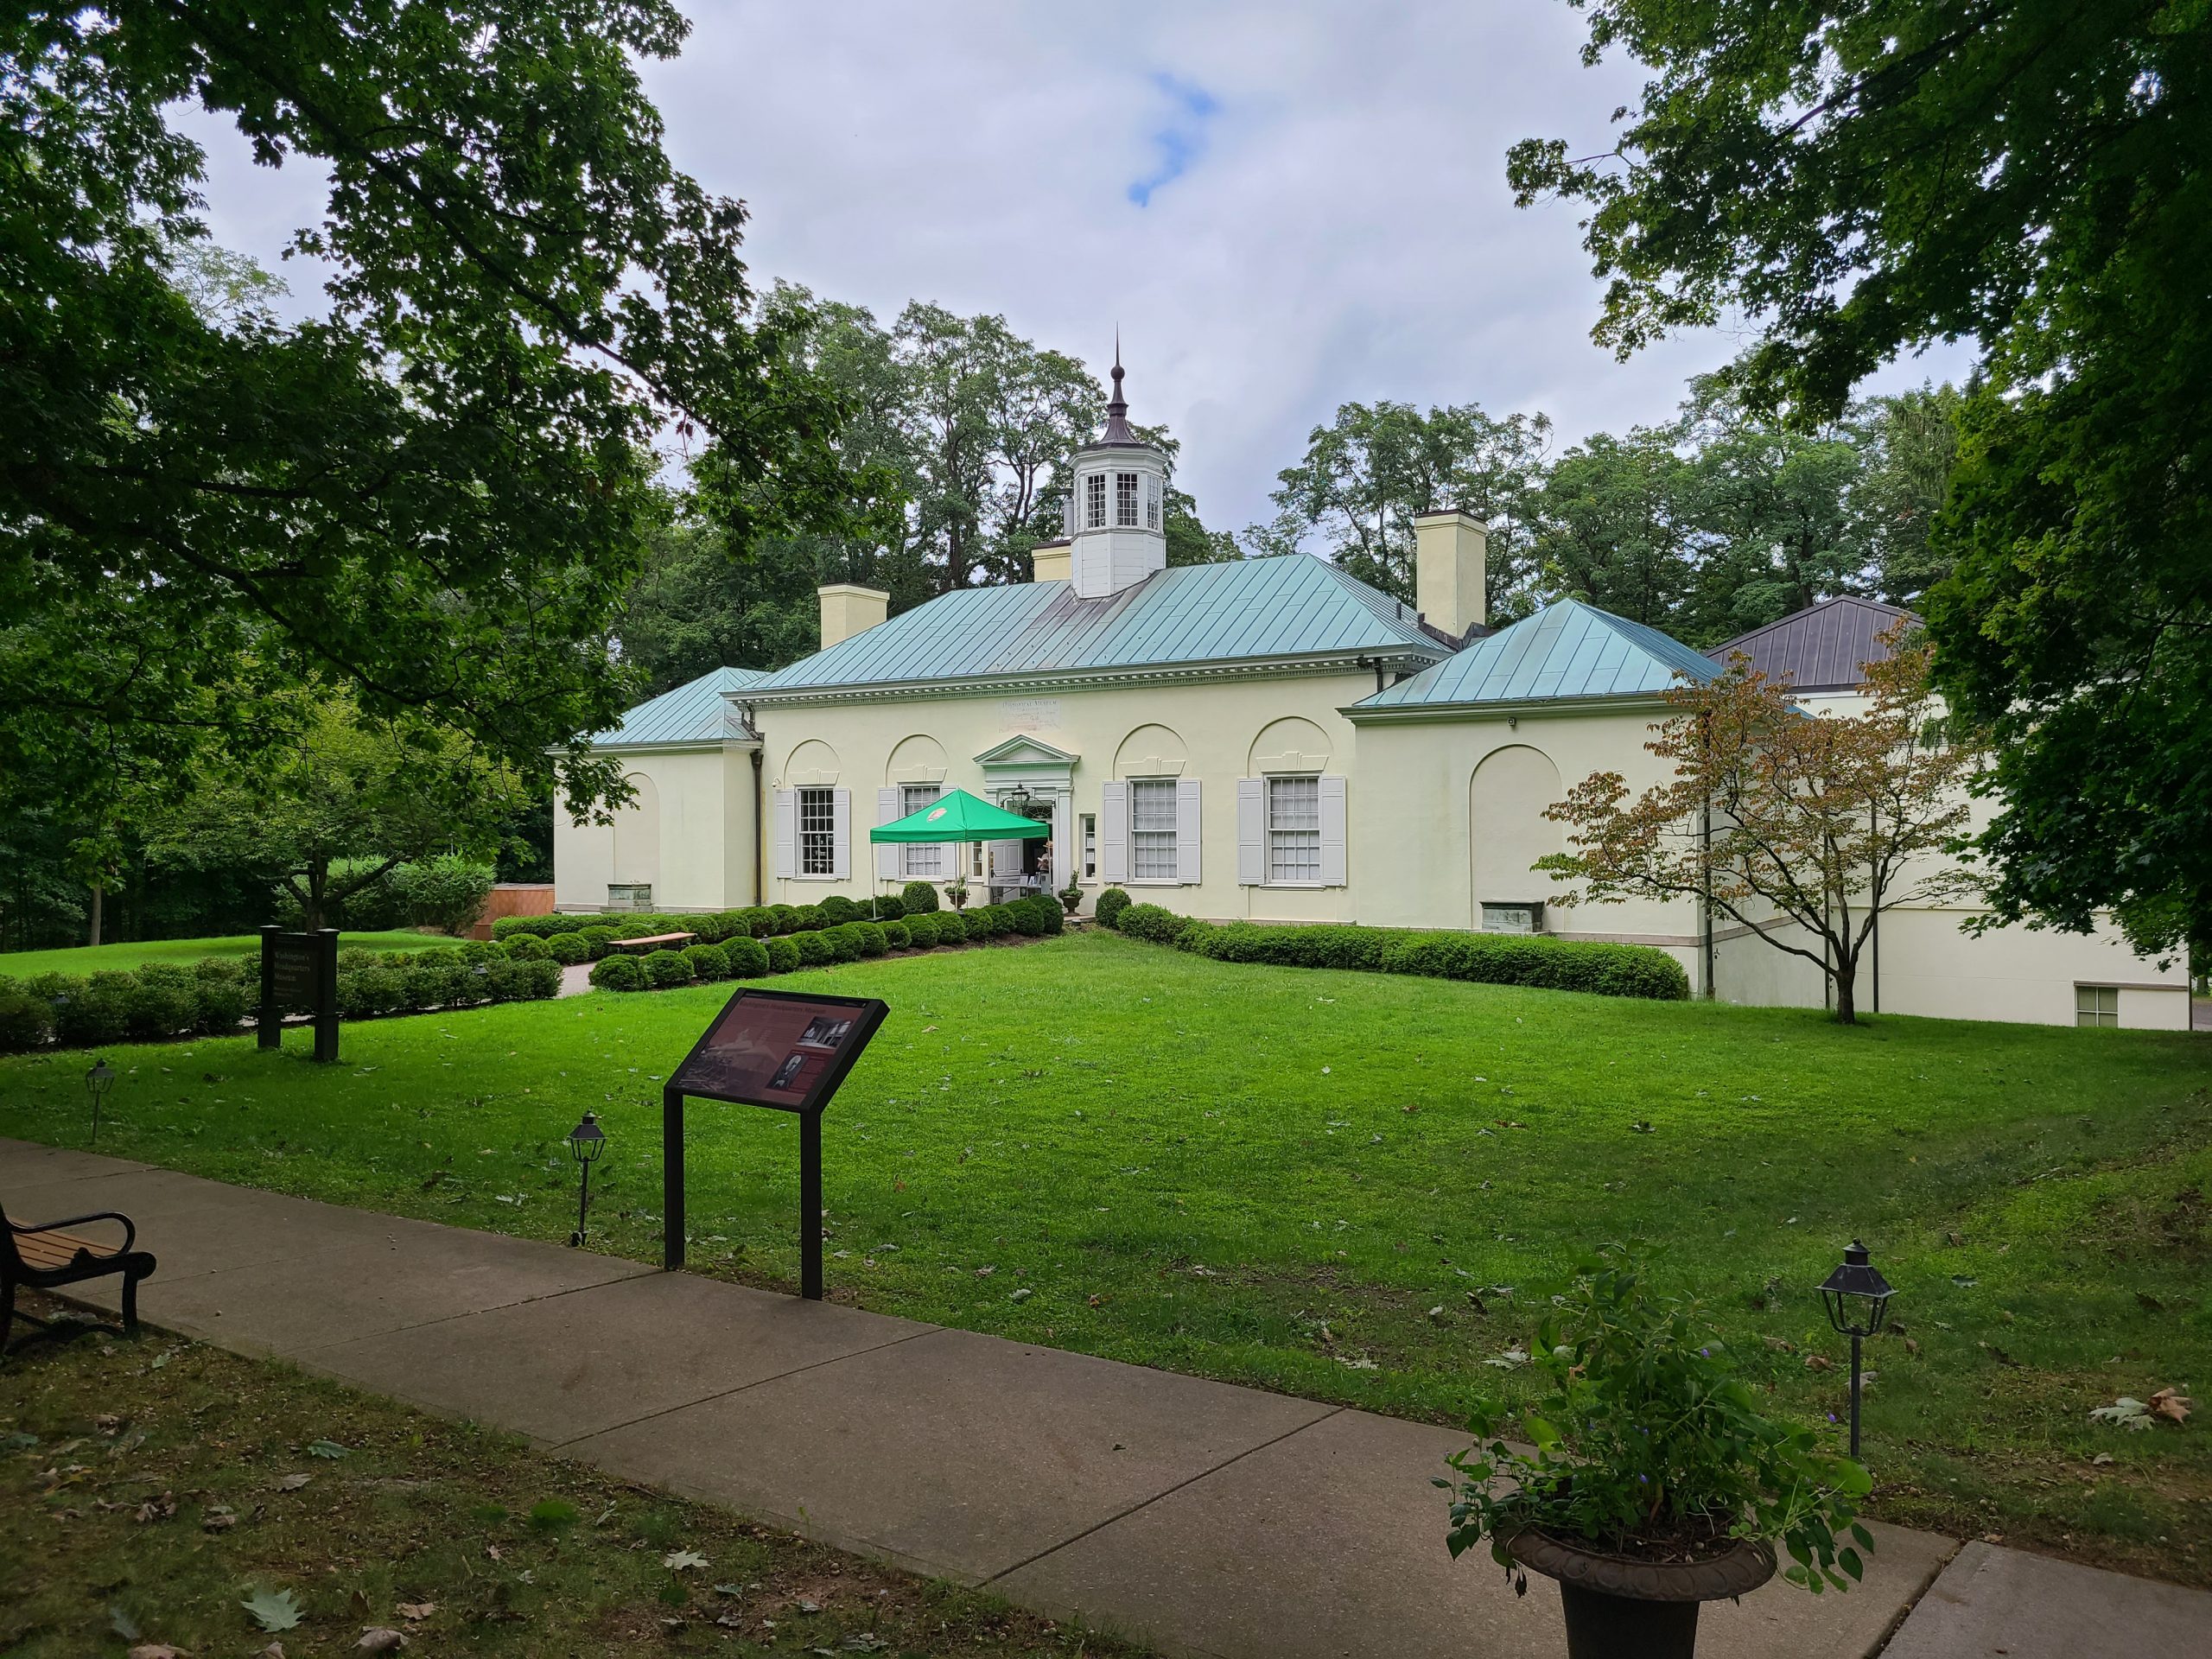 A photo of the home where Washington and Hamilton stayed in Jockey Hollow Park